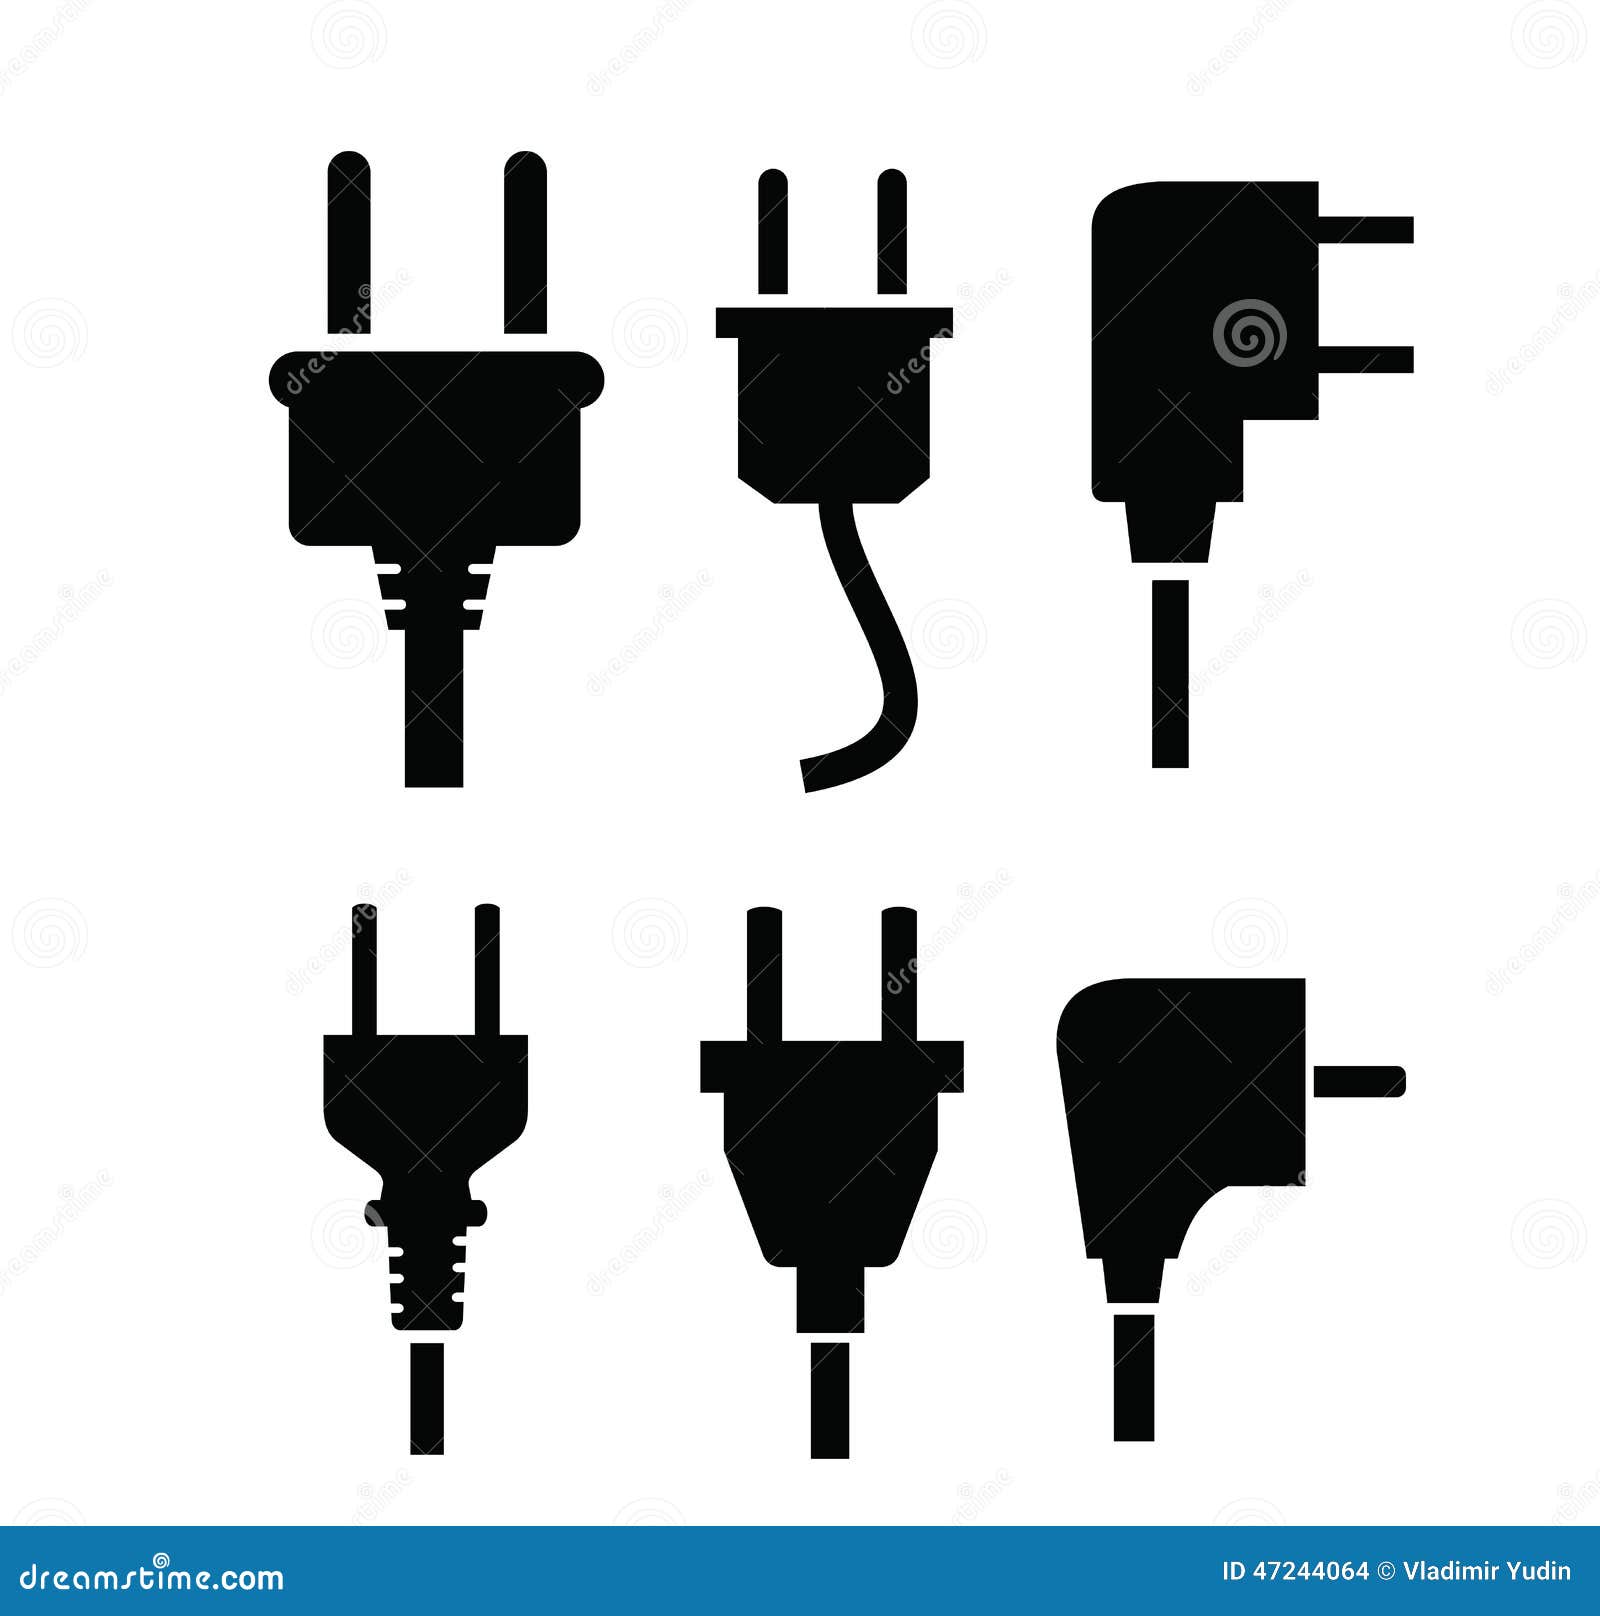 electric plug icon